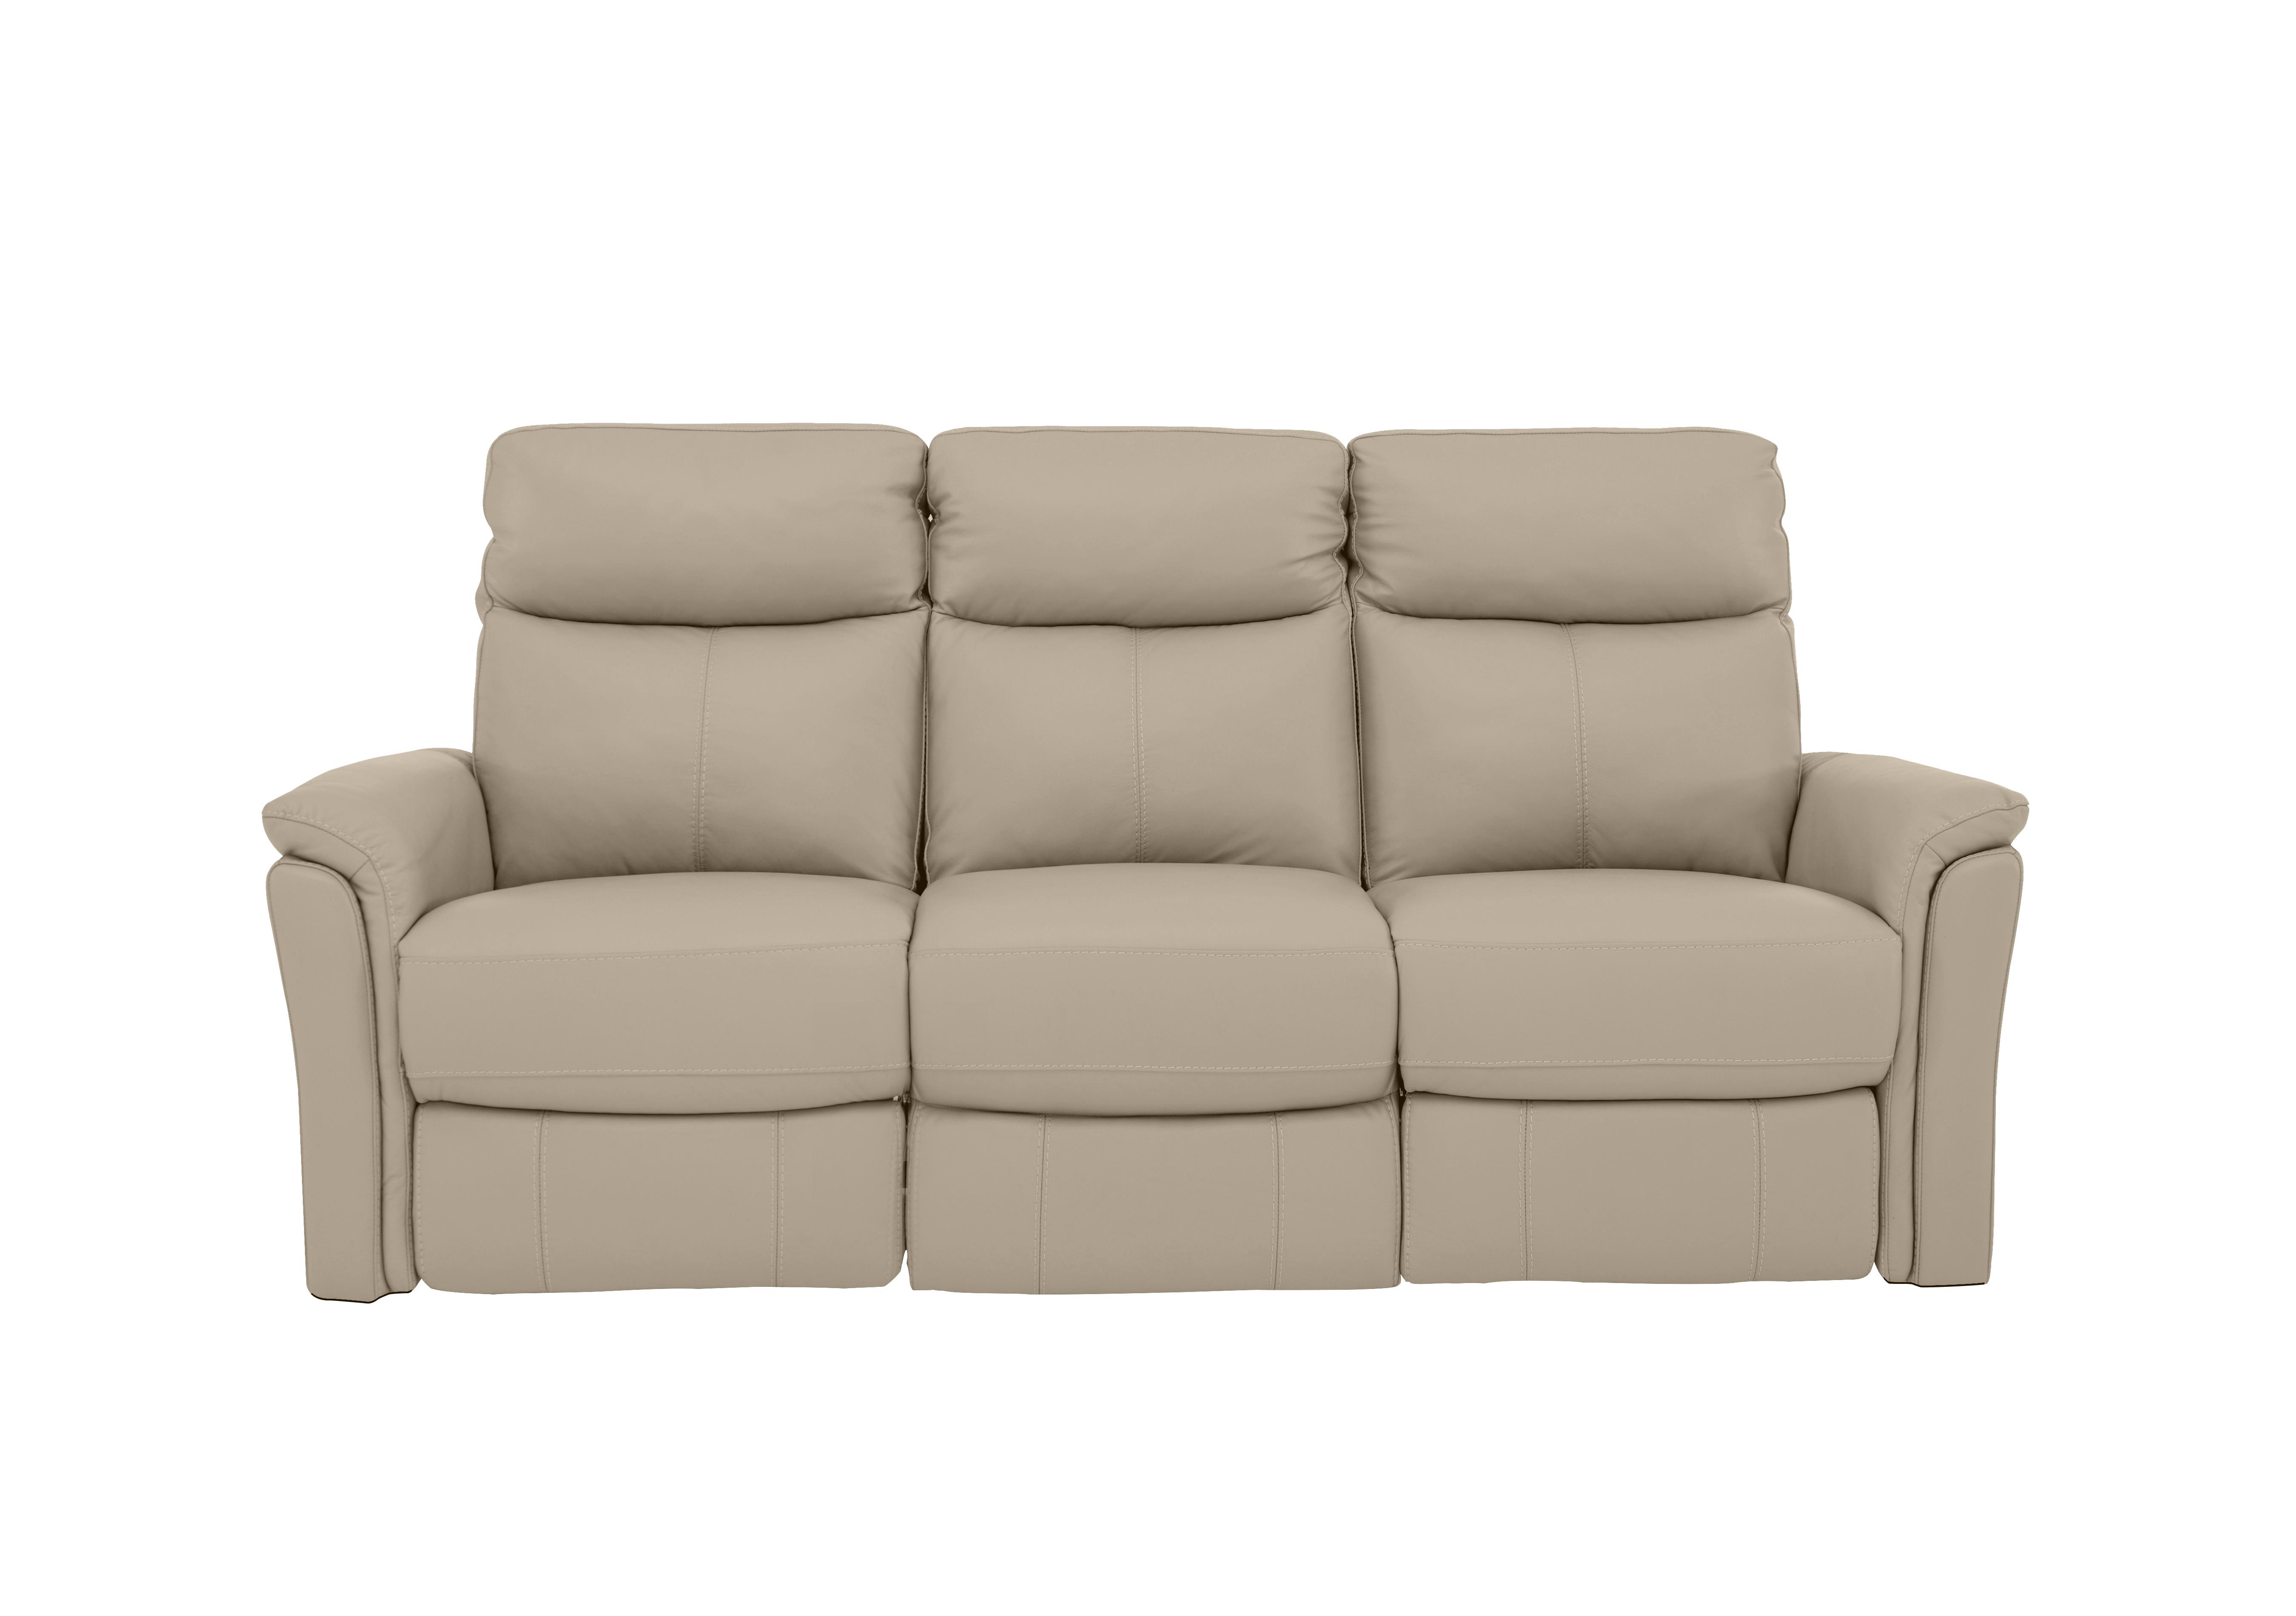 Compact Collection Piccolo 3 Seater Sofa in Bv-041e Dapple Grey on Furniture Village